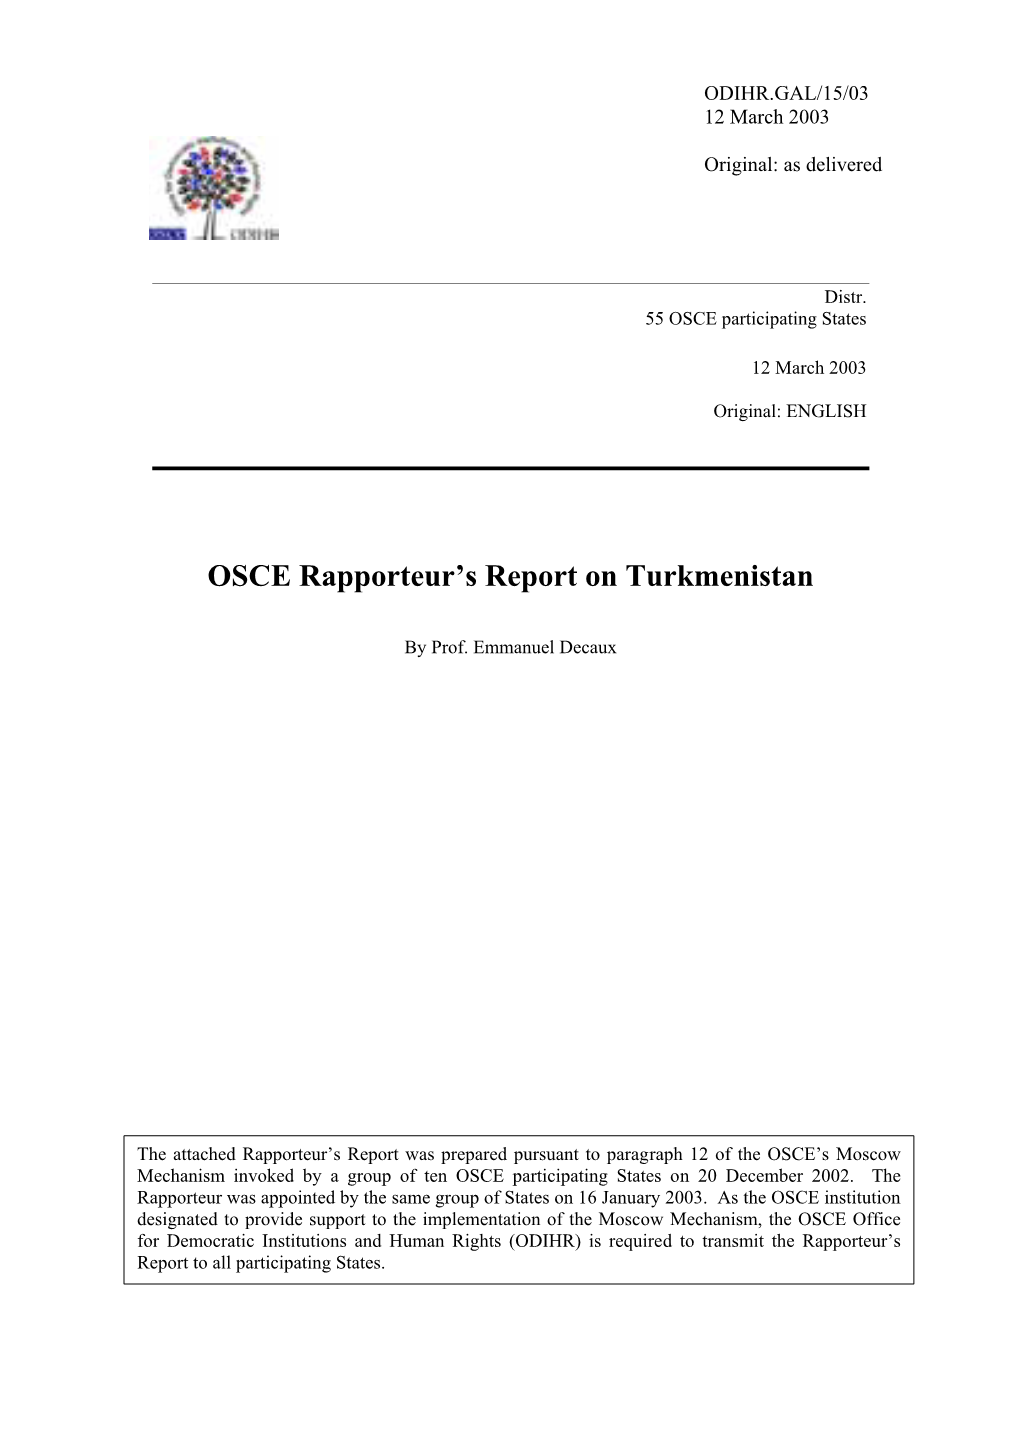 OSCE Rapporteur's Report on Turkmenistan